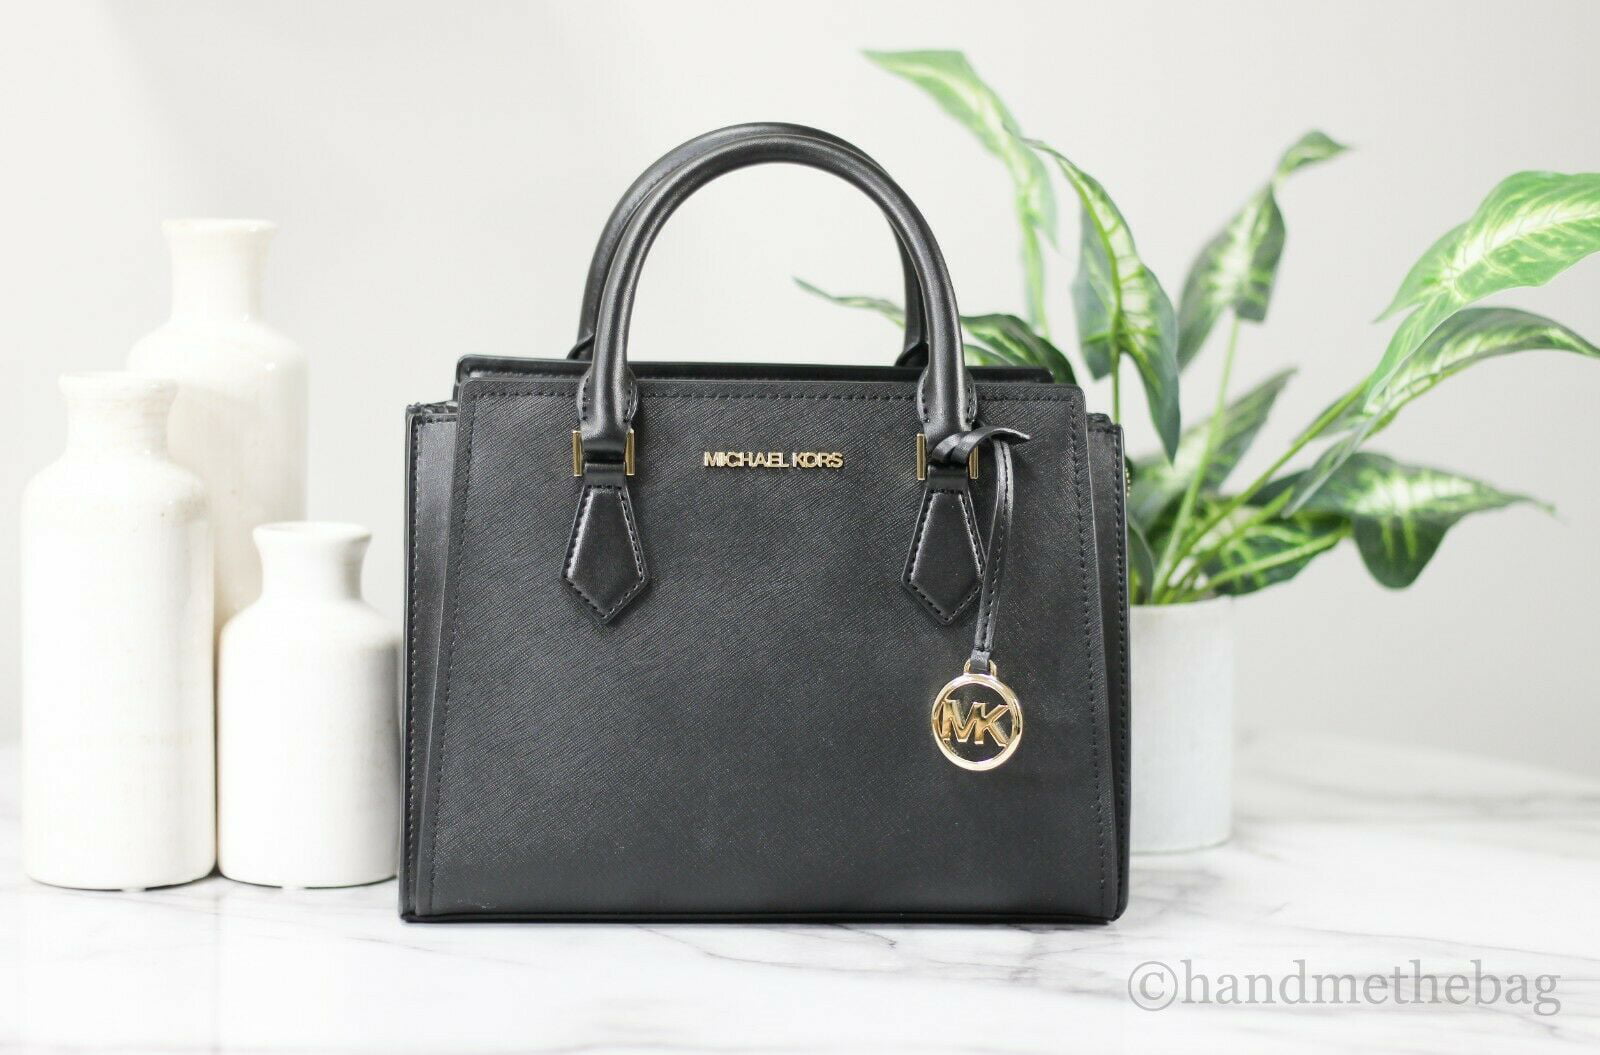 Michael Kors Hope Leather Medium Messenger Bag Crossbody Handbag Black/Gold) - Walmart.com